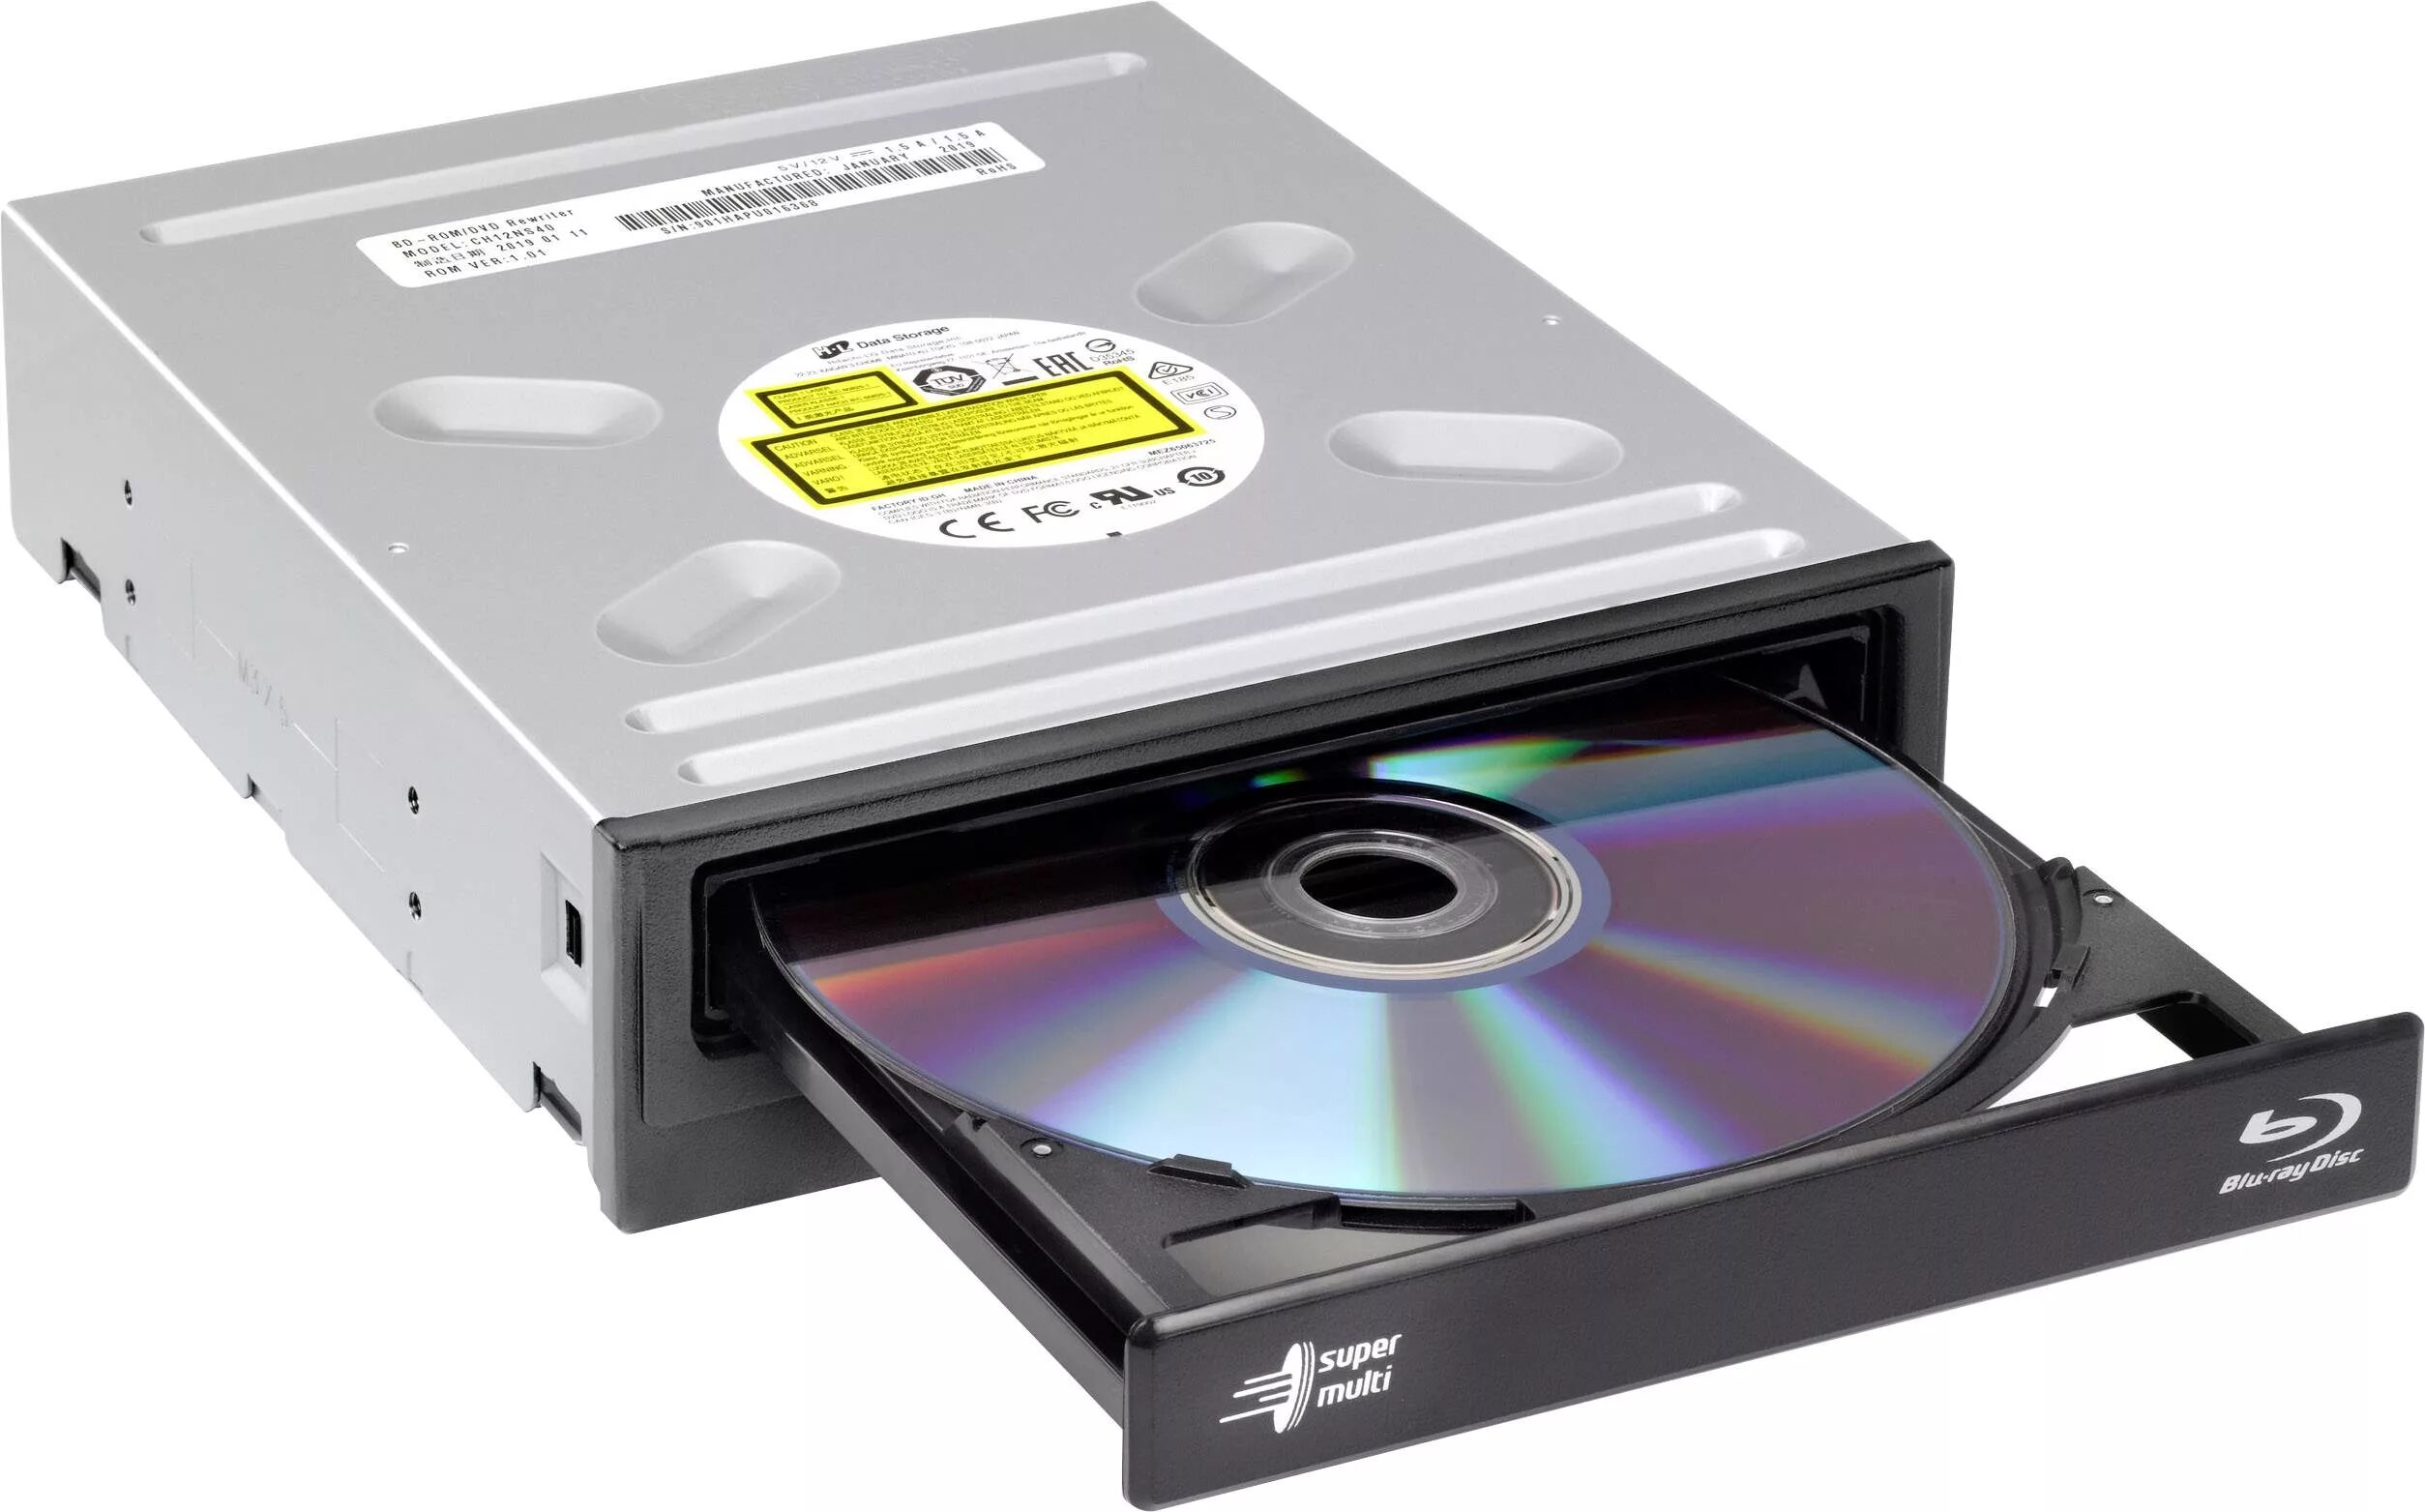 DVD-RW LG gh24nsd5. DVD привод LG gh24nsd5. DVD±RW LG gh24nsd5 OEM. Оптический привод DVD-RW LG gh24nsd5, внутренний, SATA, черный. Cd dvd привод купить